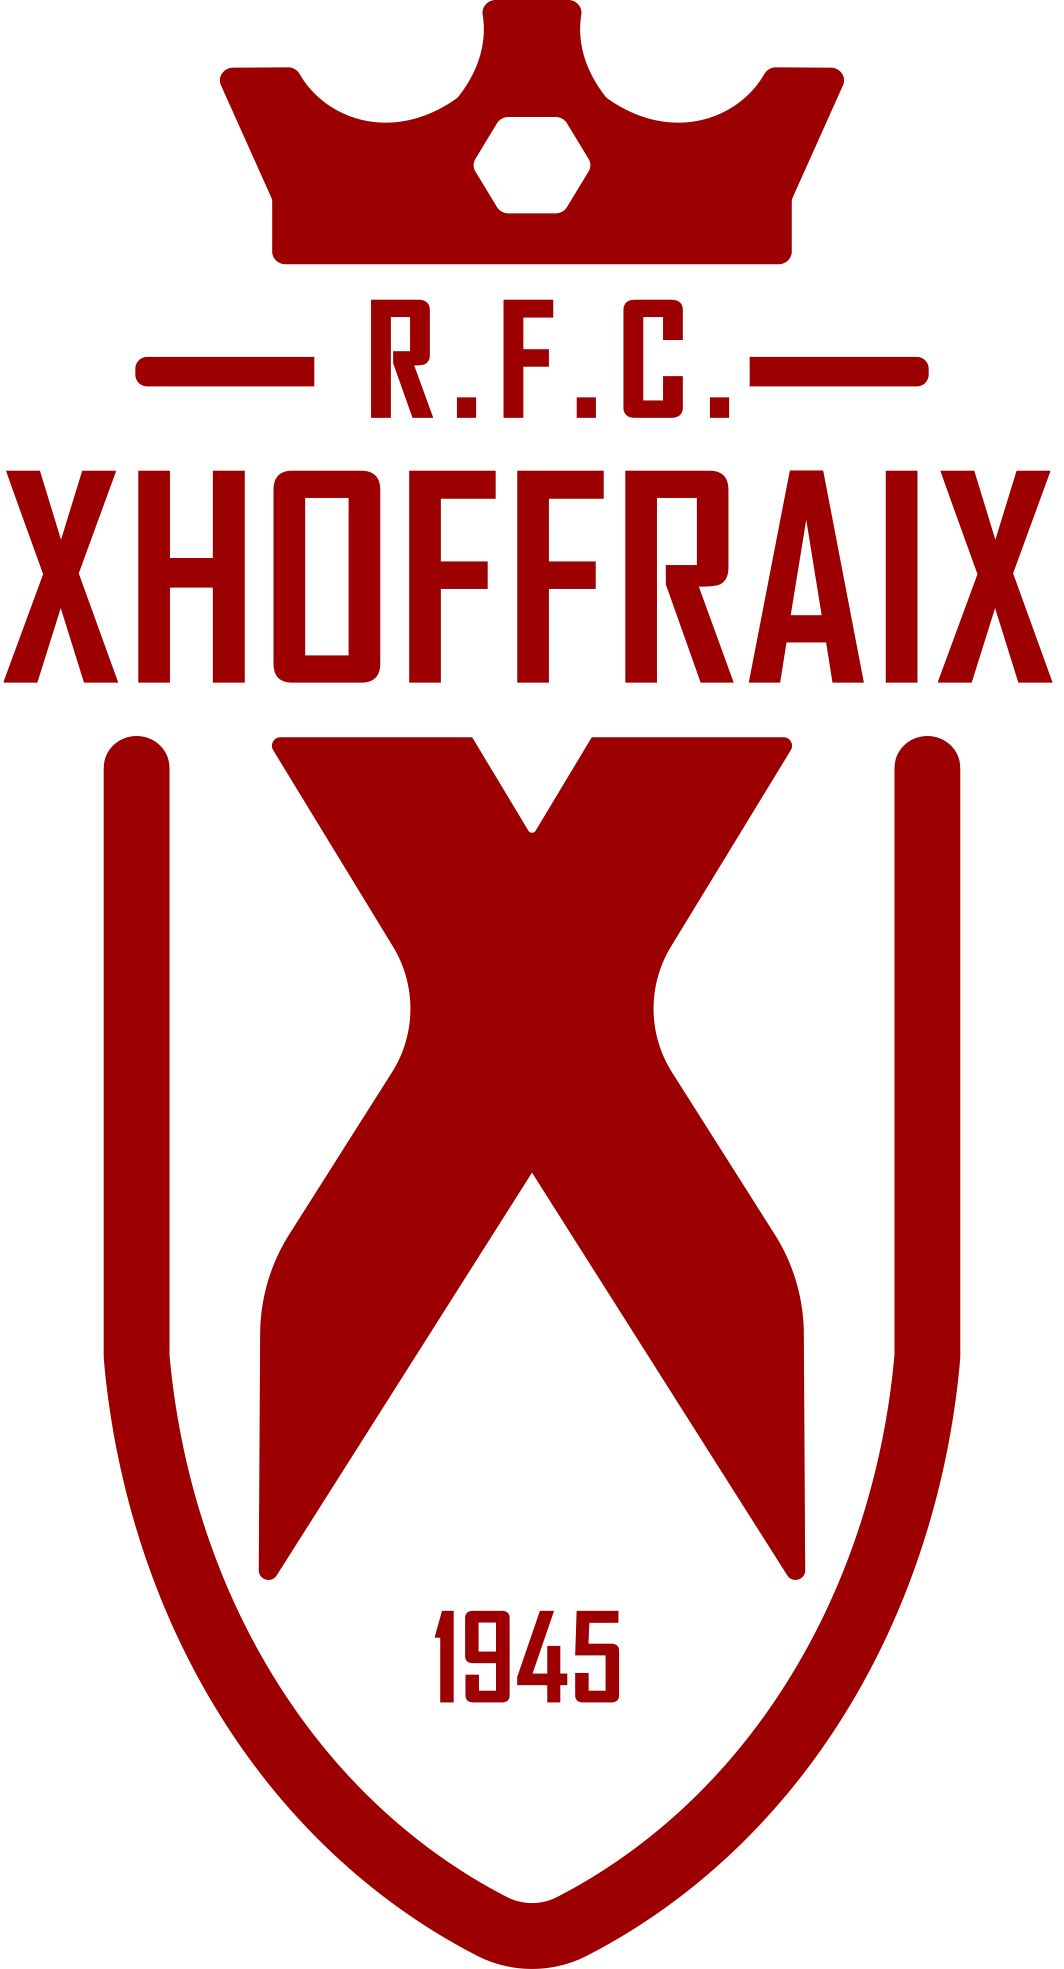 8 - Xhoffraix